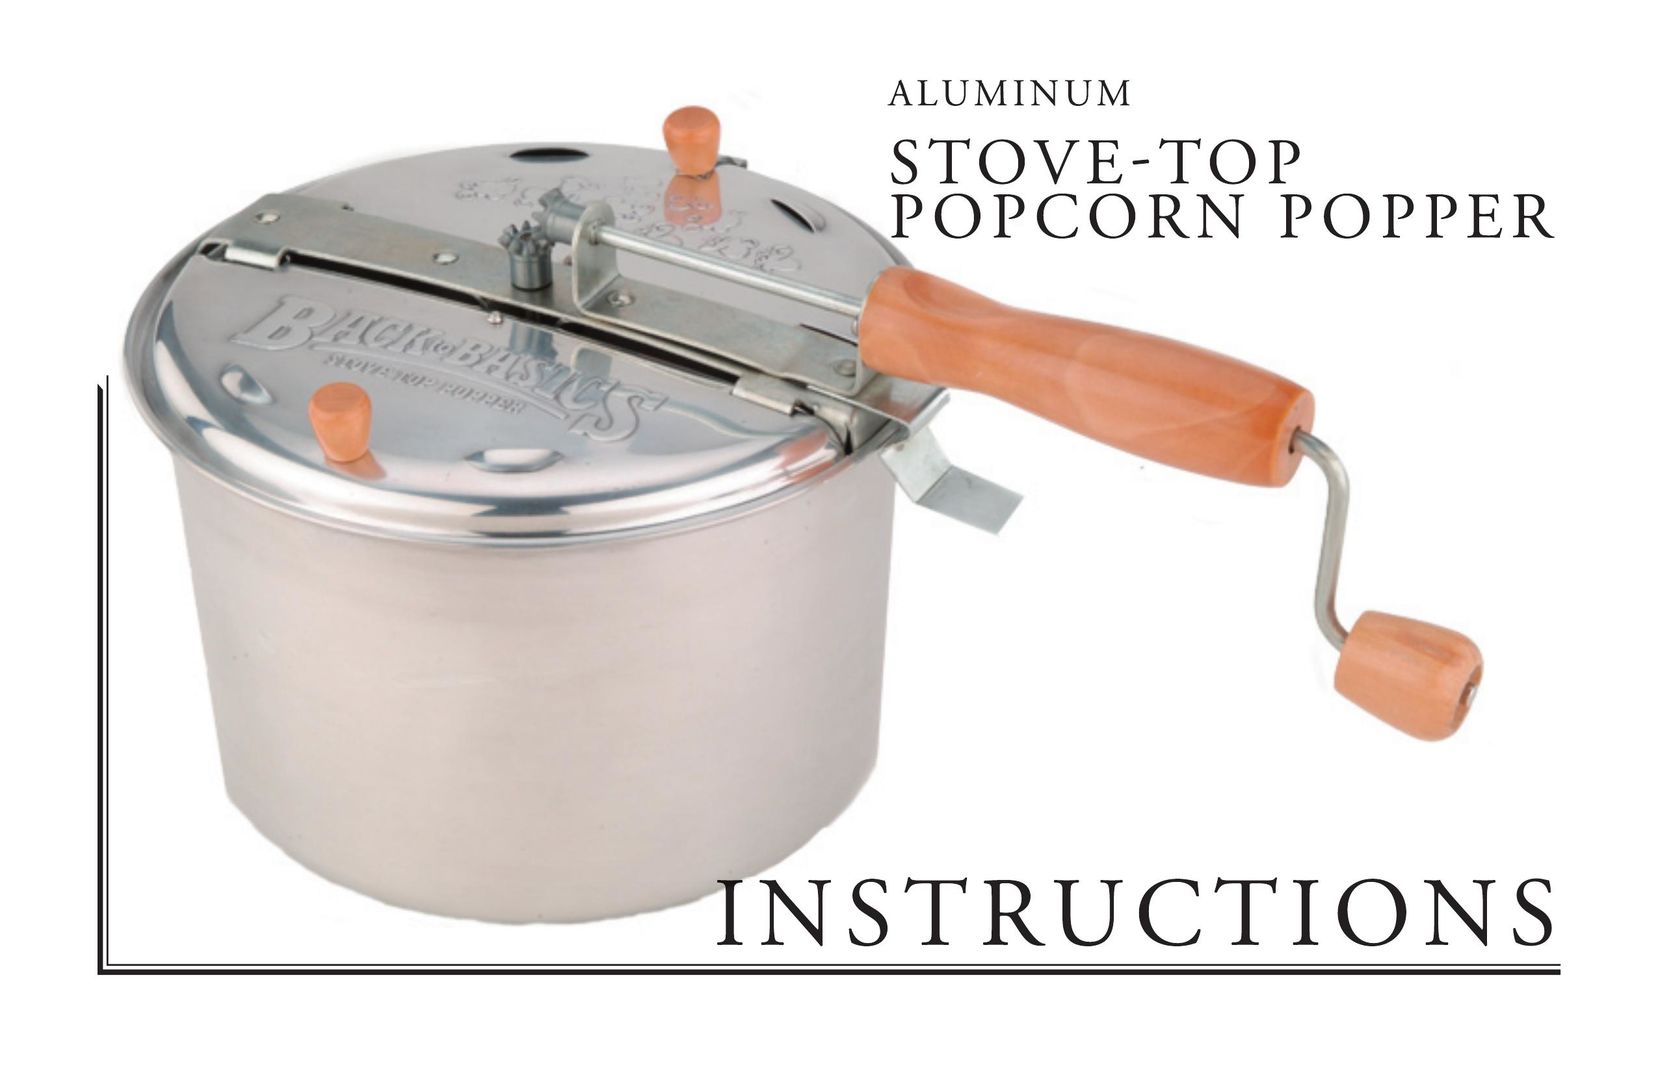 West Bend Back to Basics PCALINST Popcorn Poppers User Manual